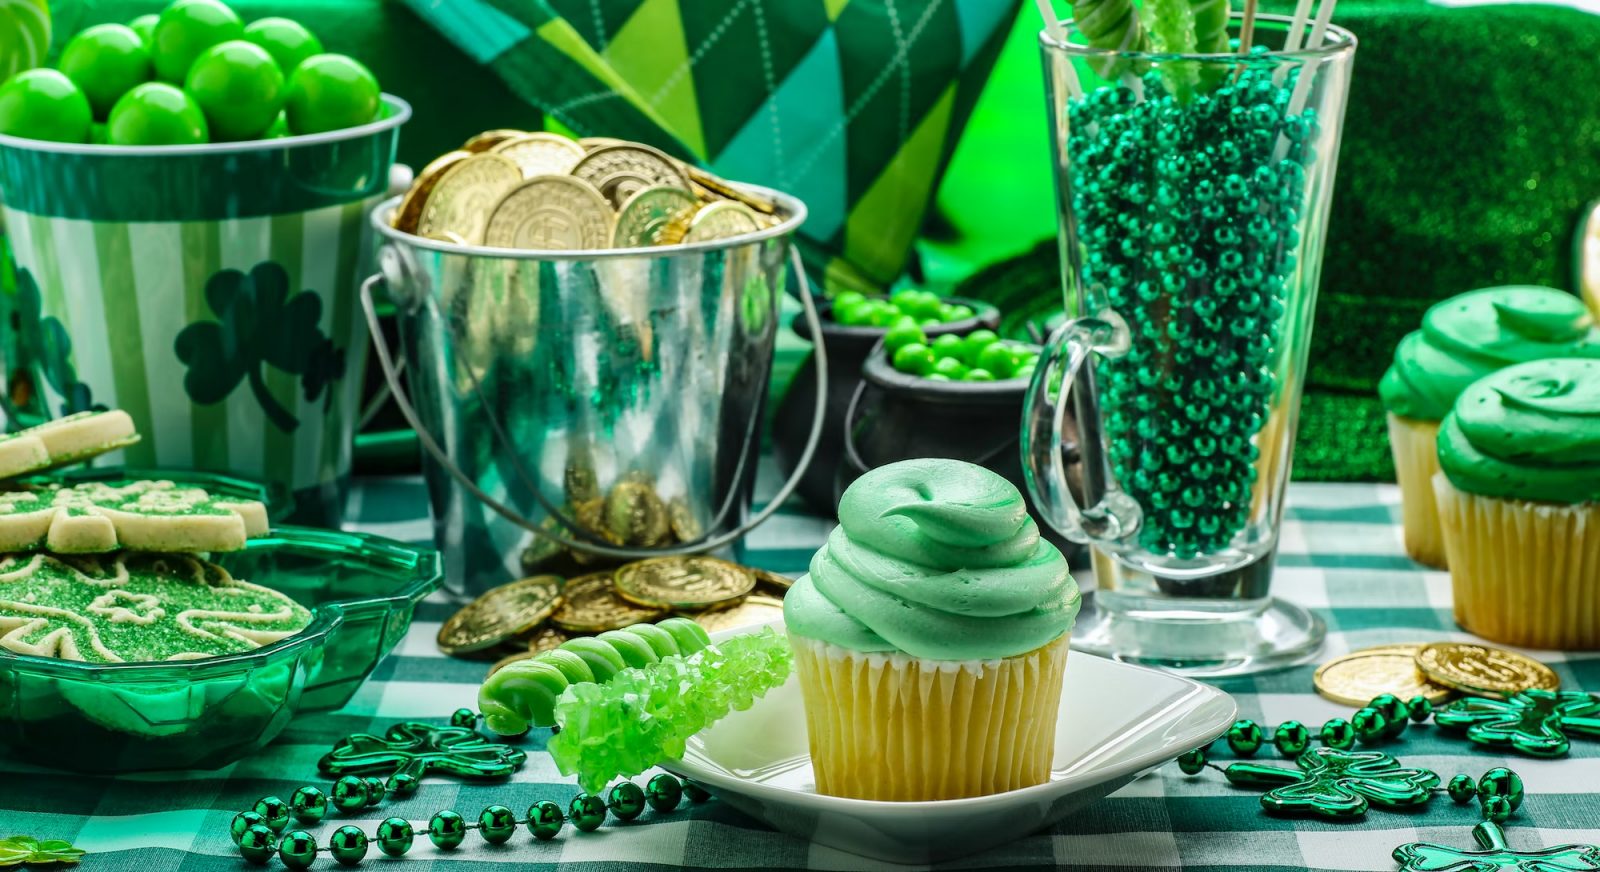 St. Patrick's Day desserts